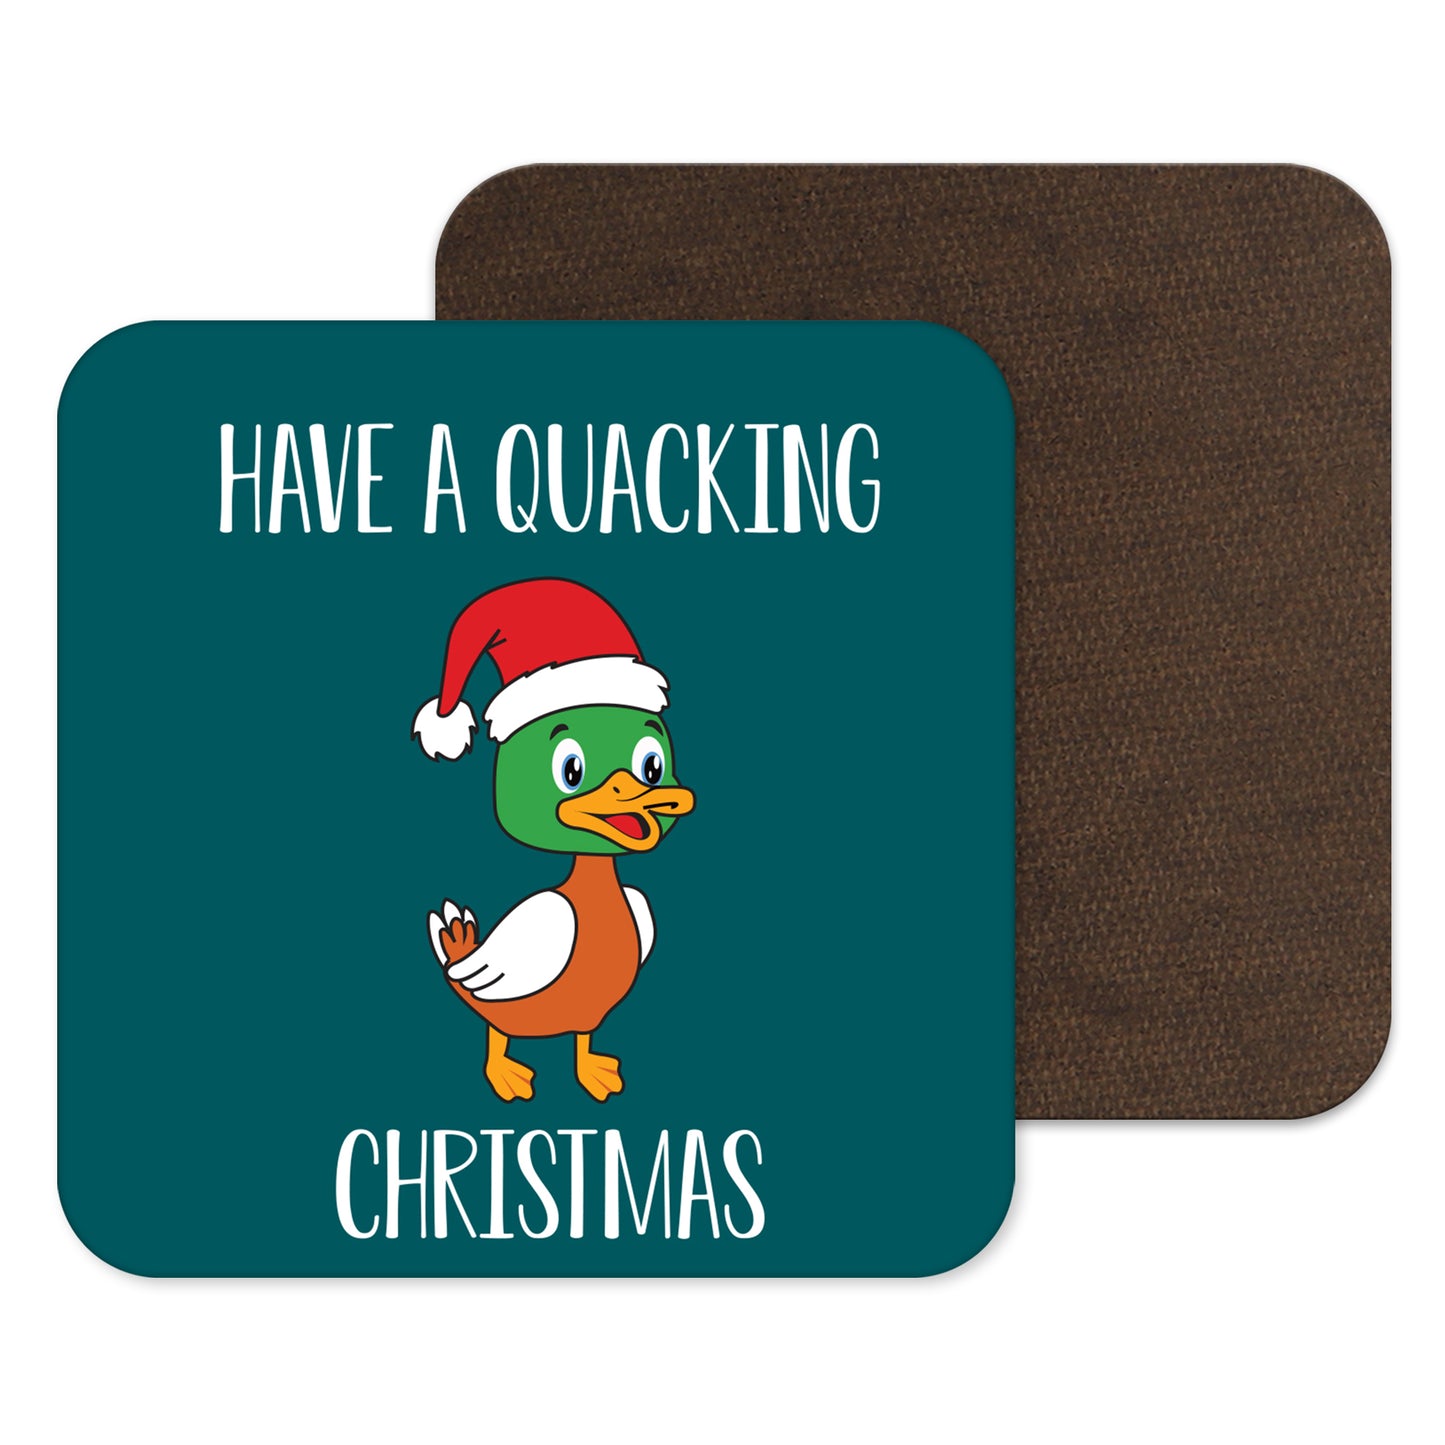 Have A Quacking Christmas Coaster